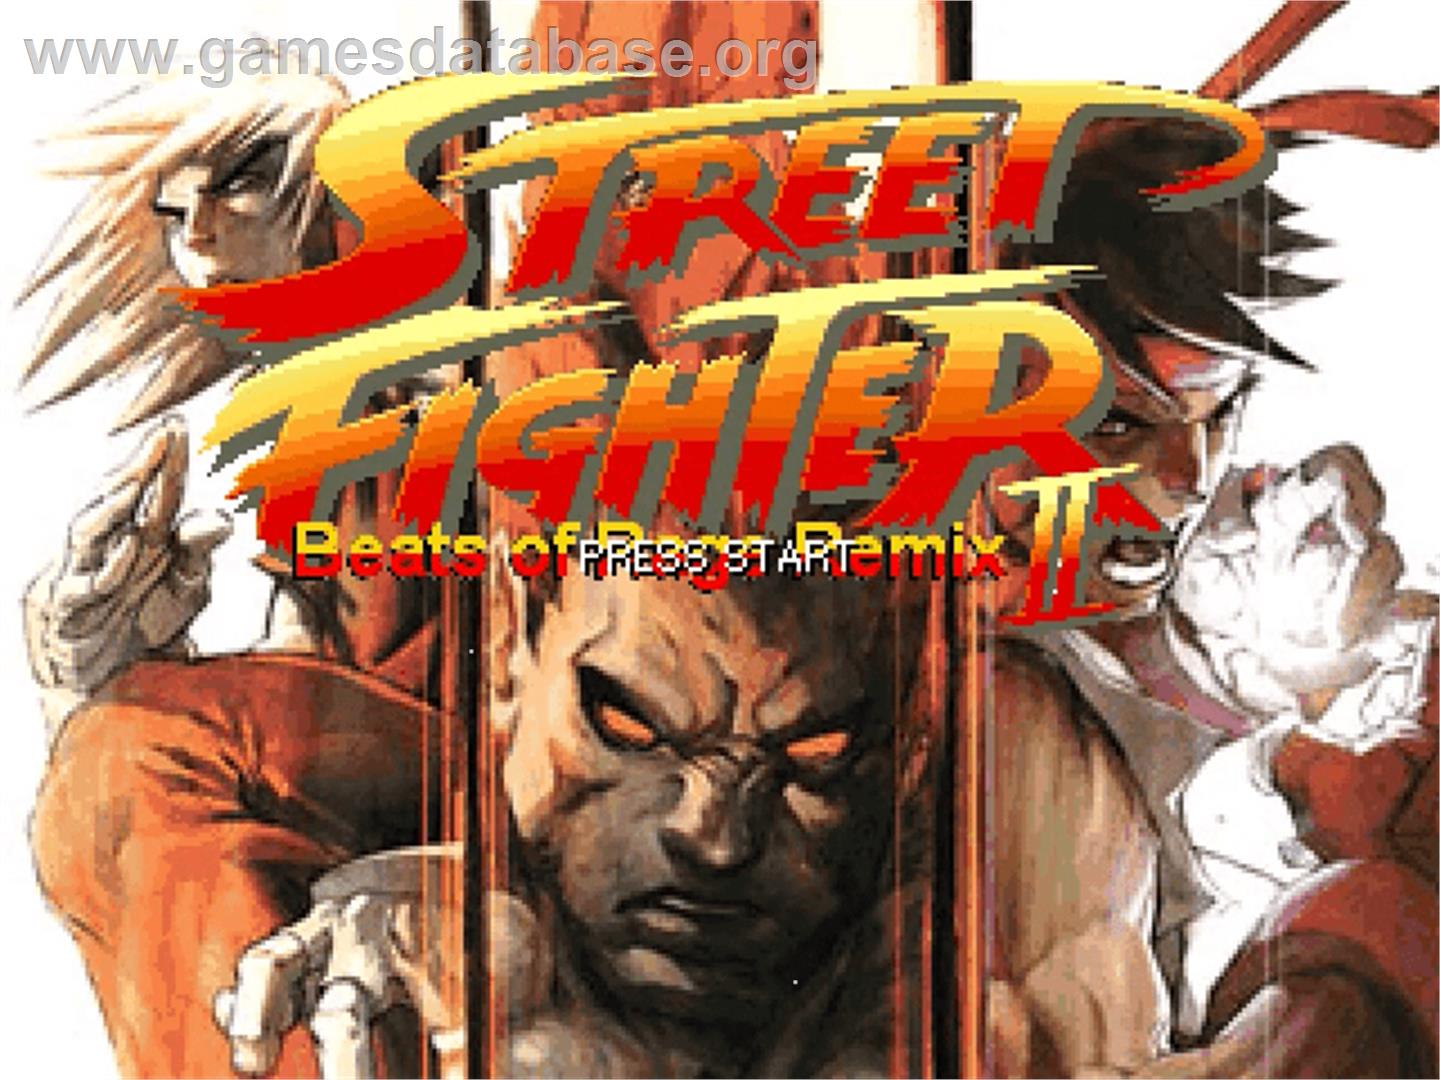 Rhythm of Destruction 2 - Street Fighter Edition - OpenBOR - Artwork - Title Screen